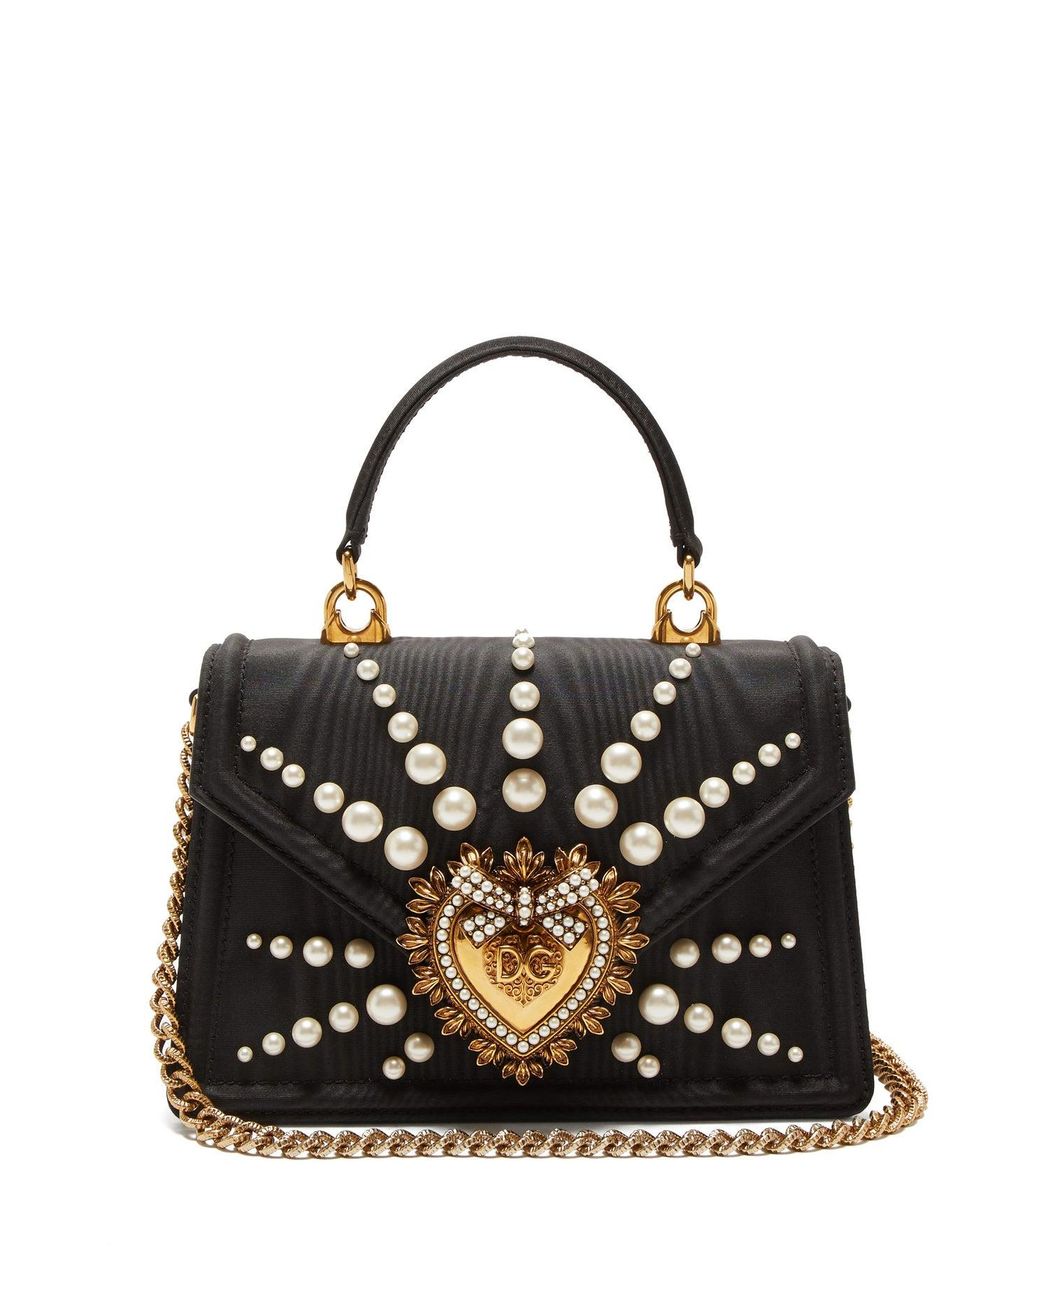 Dolce & Gabbana Devotion Faux Pearl-embellished Moire Bag in Black - Lyst